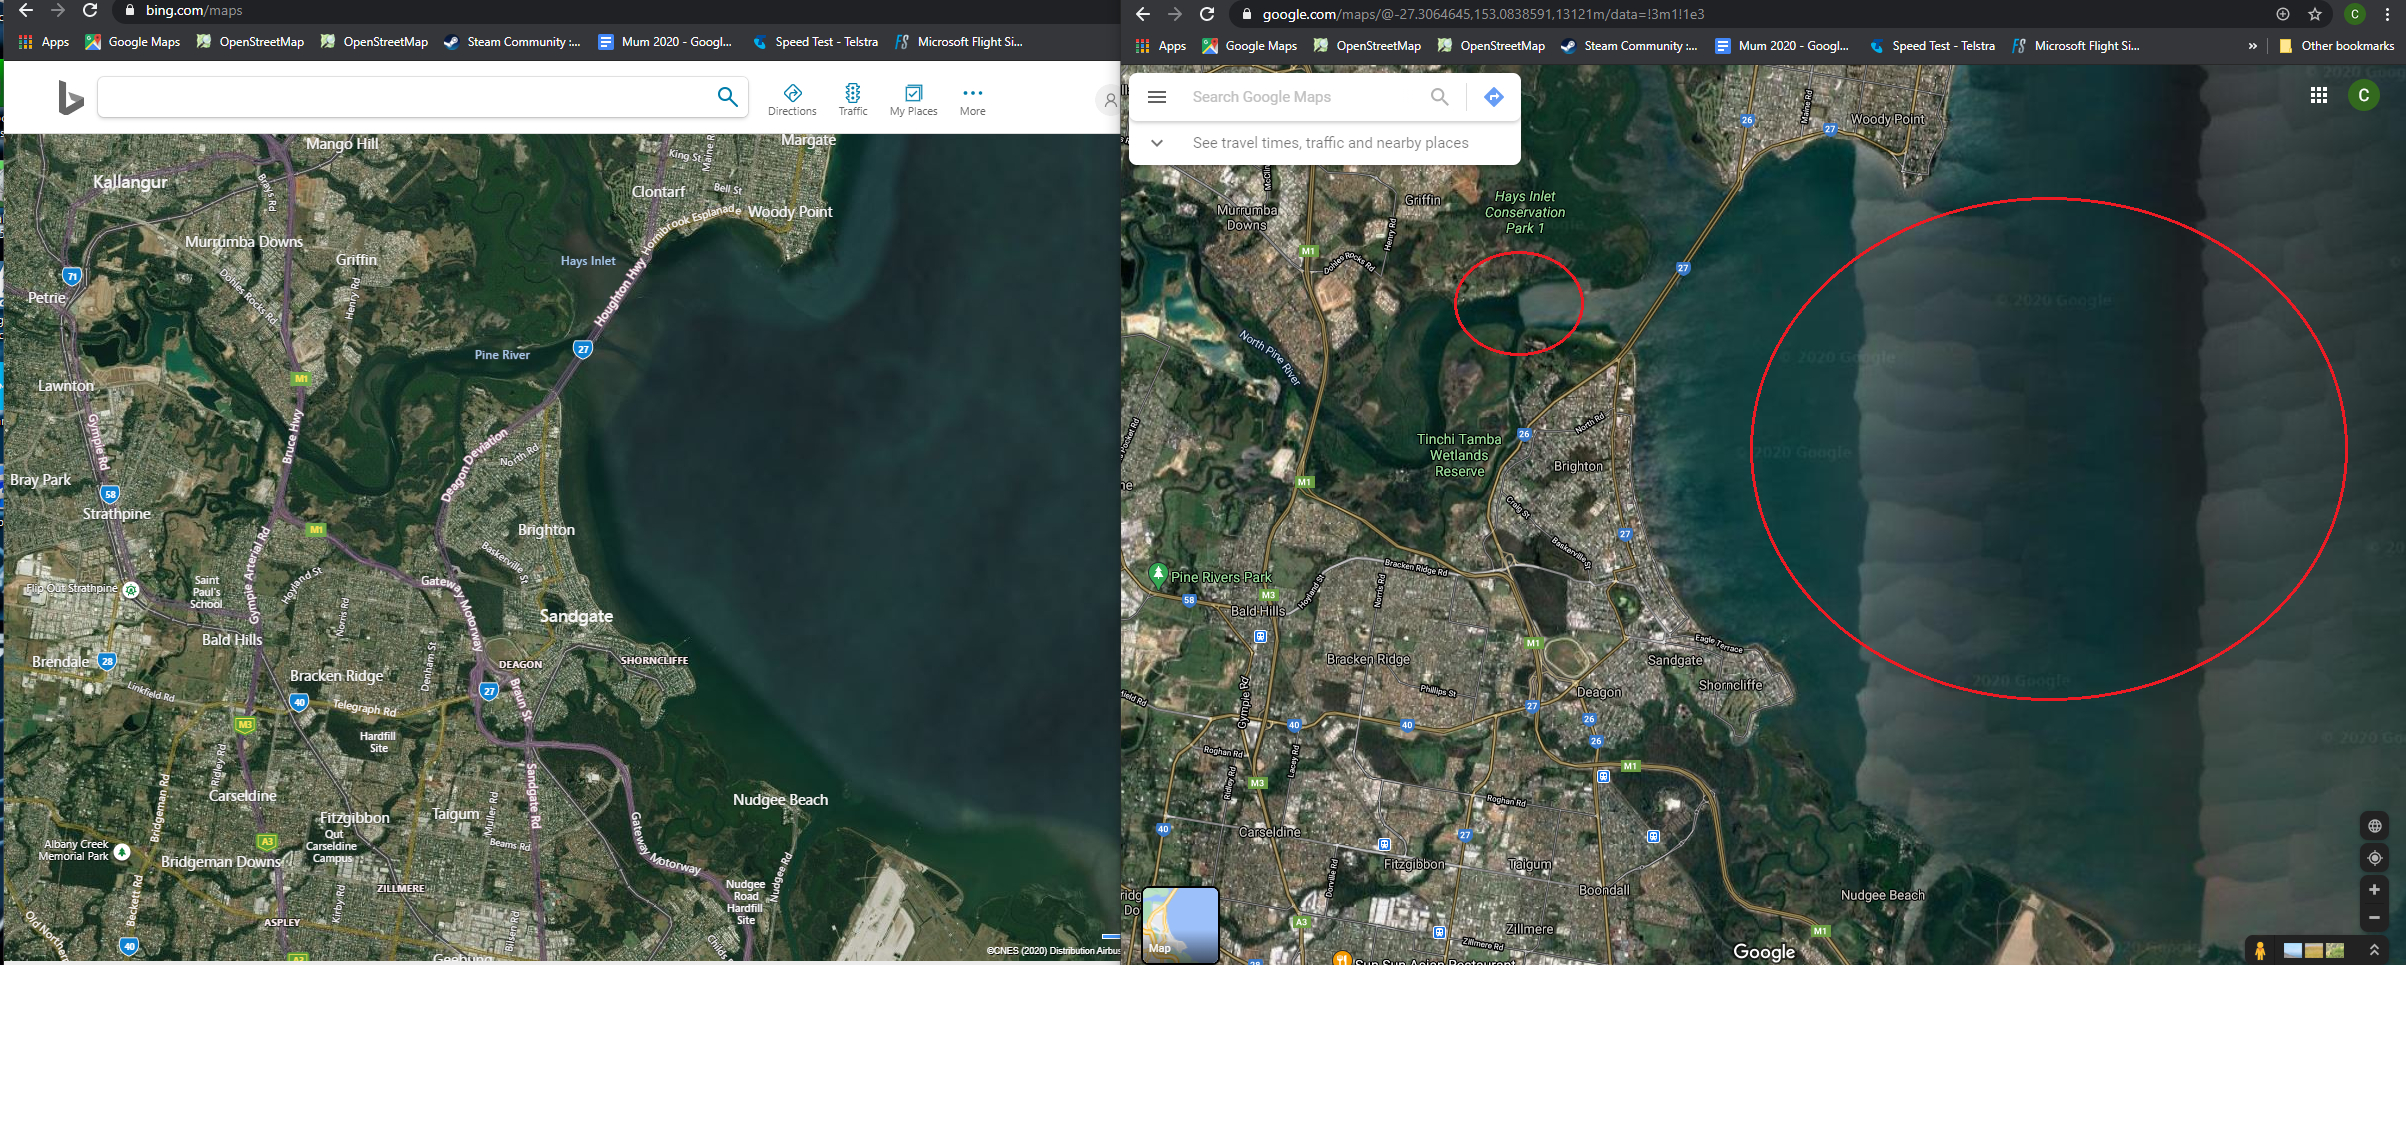 More great updates to the Google Earth Flight Simulator - Google